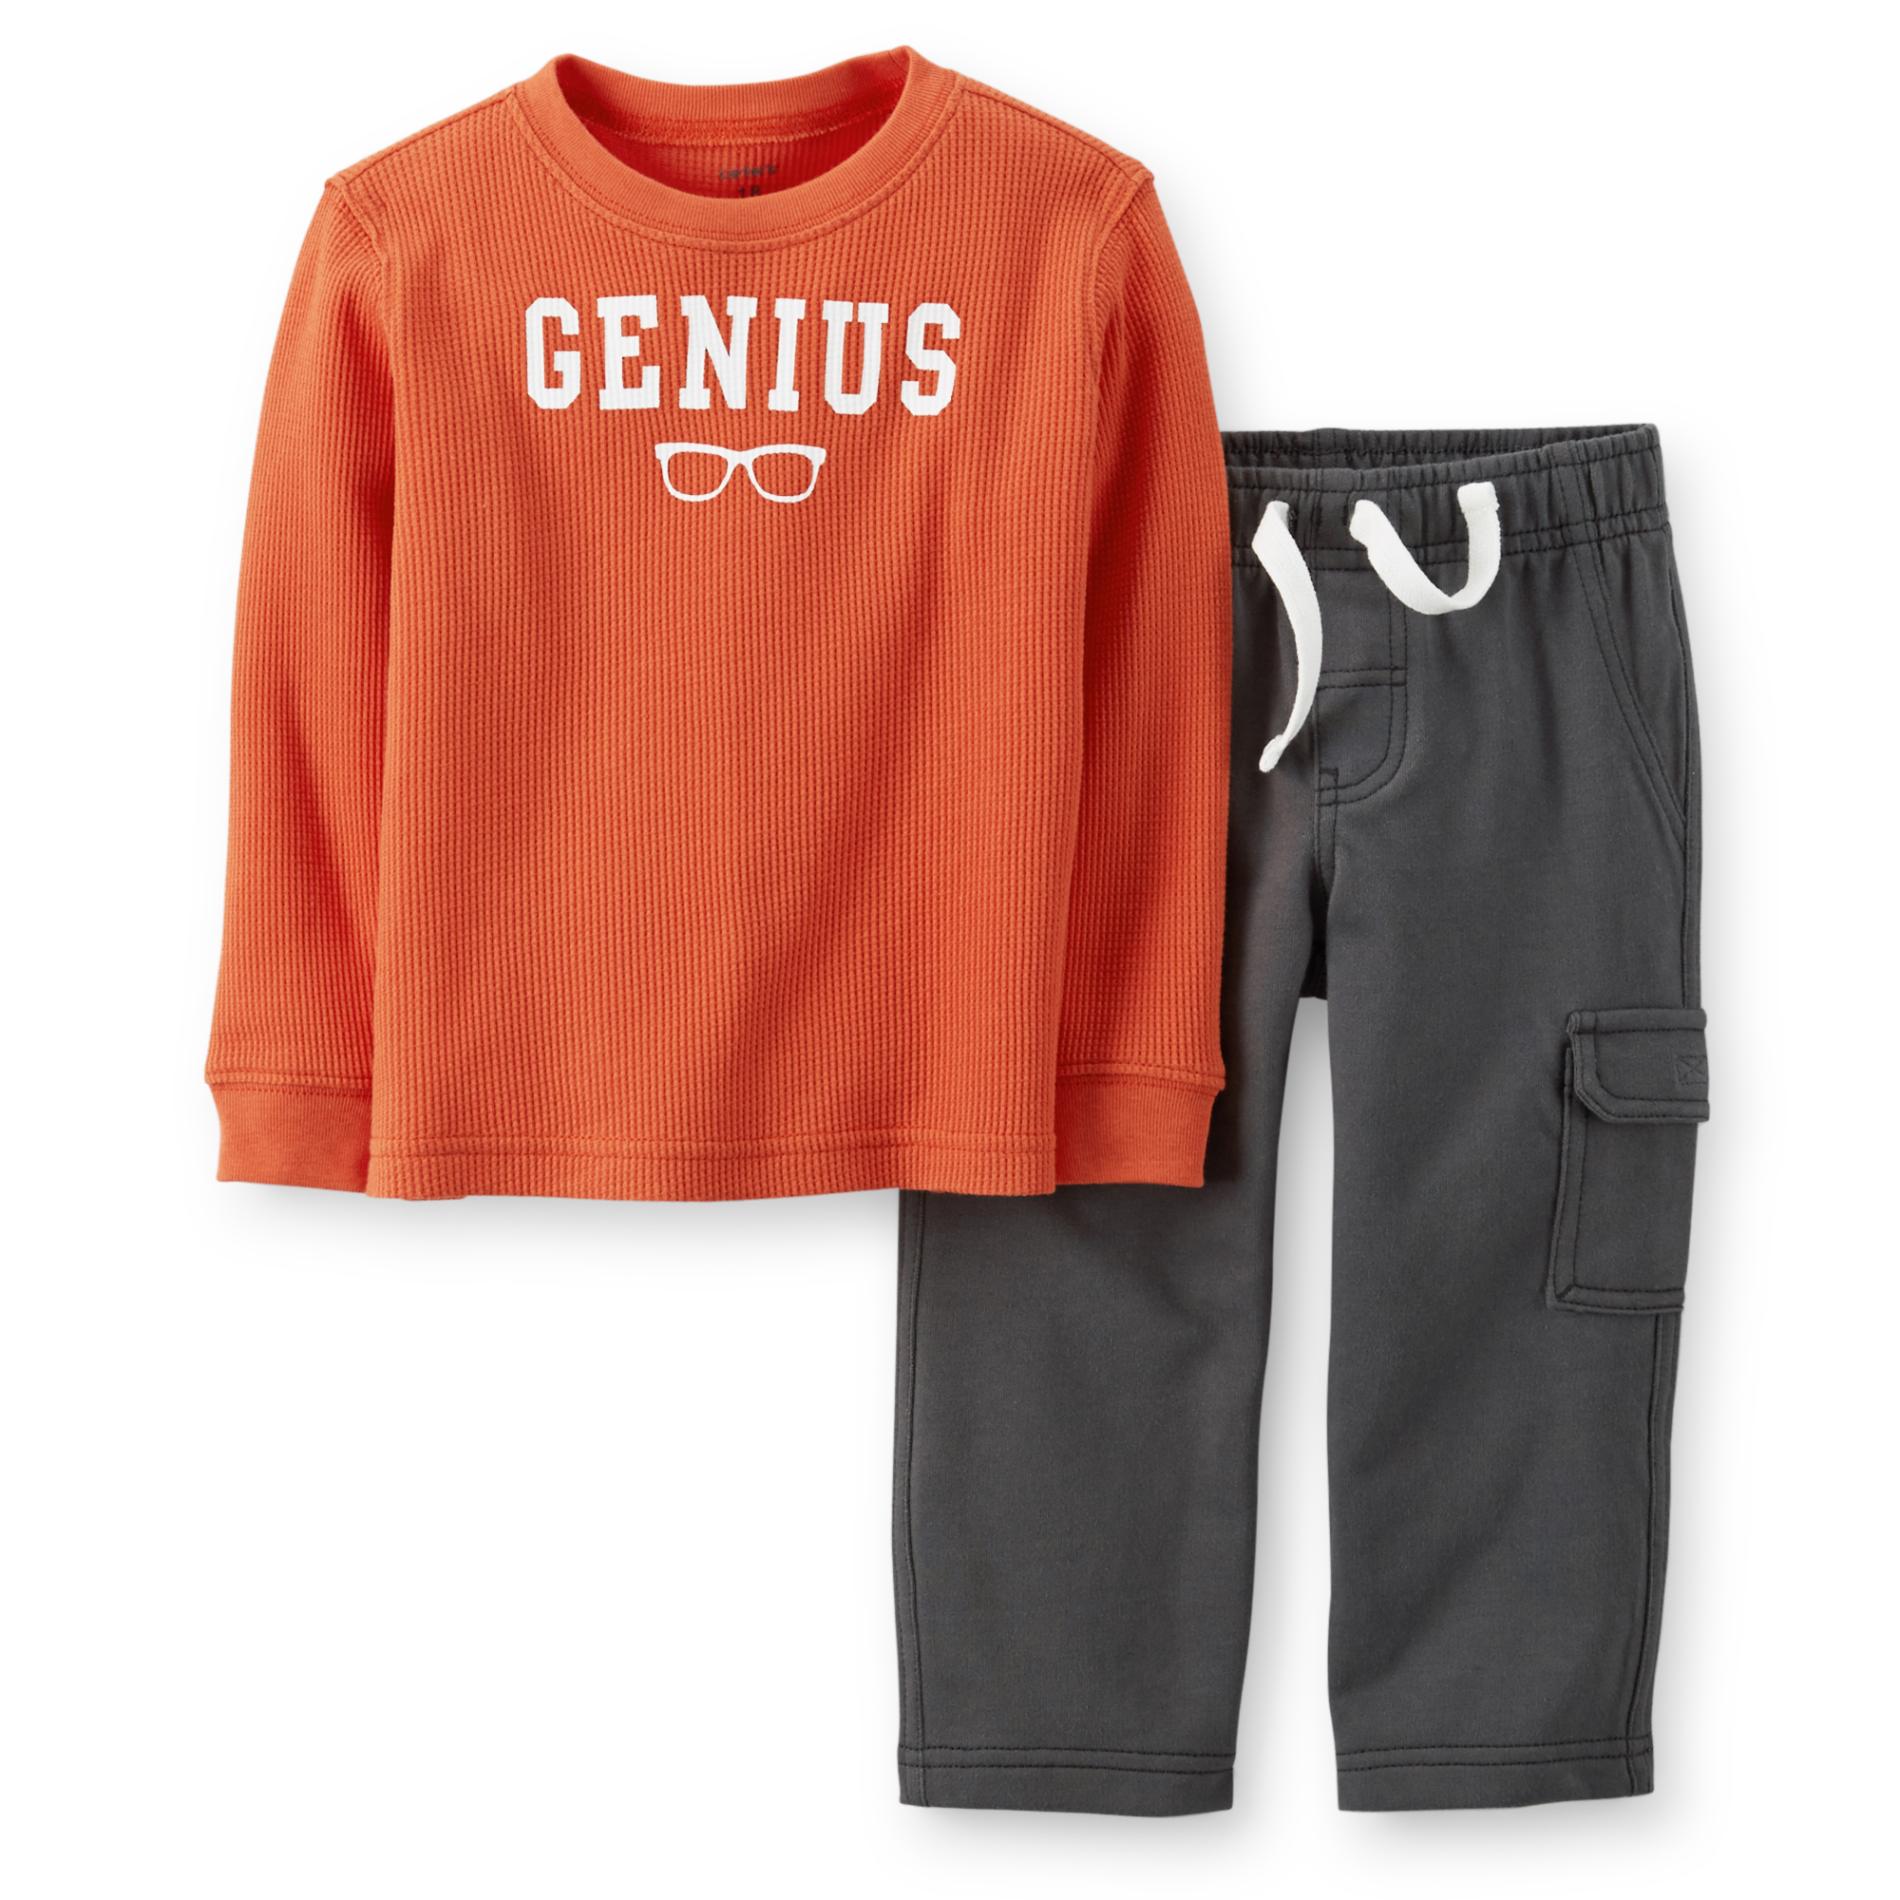 Carter's Toddler Boy's Graphic Thermal Shirt & Pants - Genius